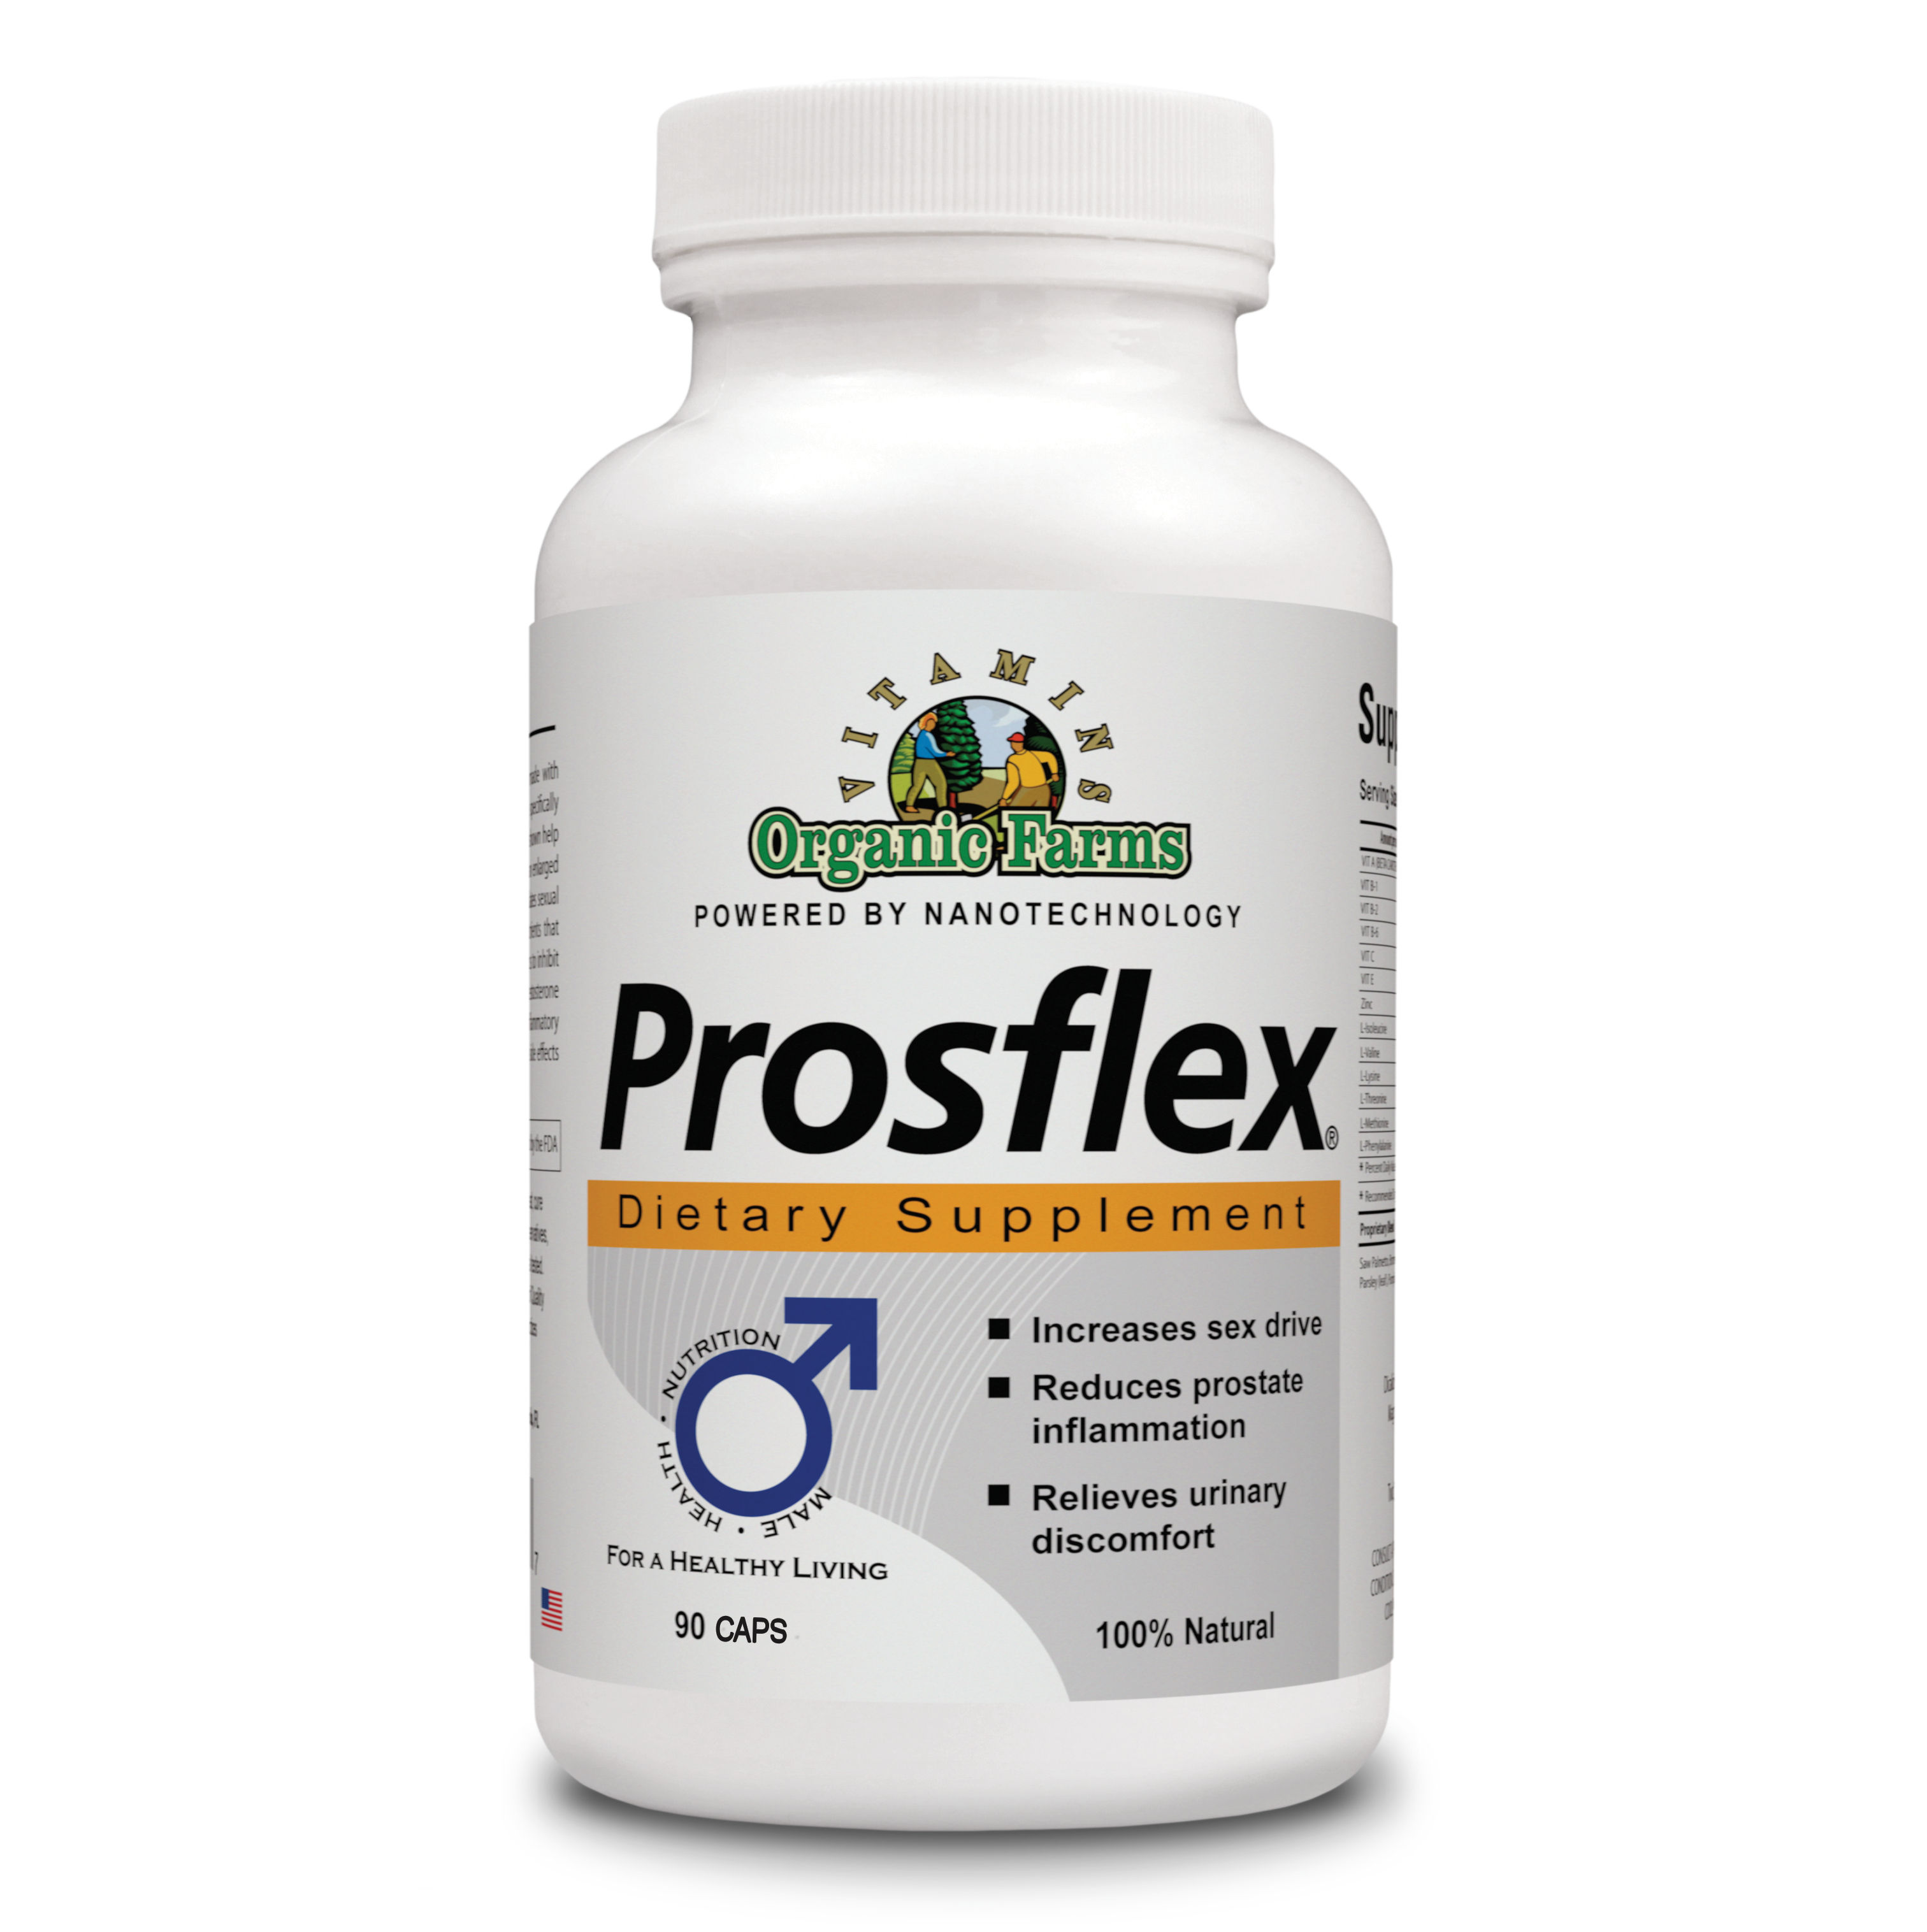 Prosflex